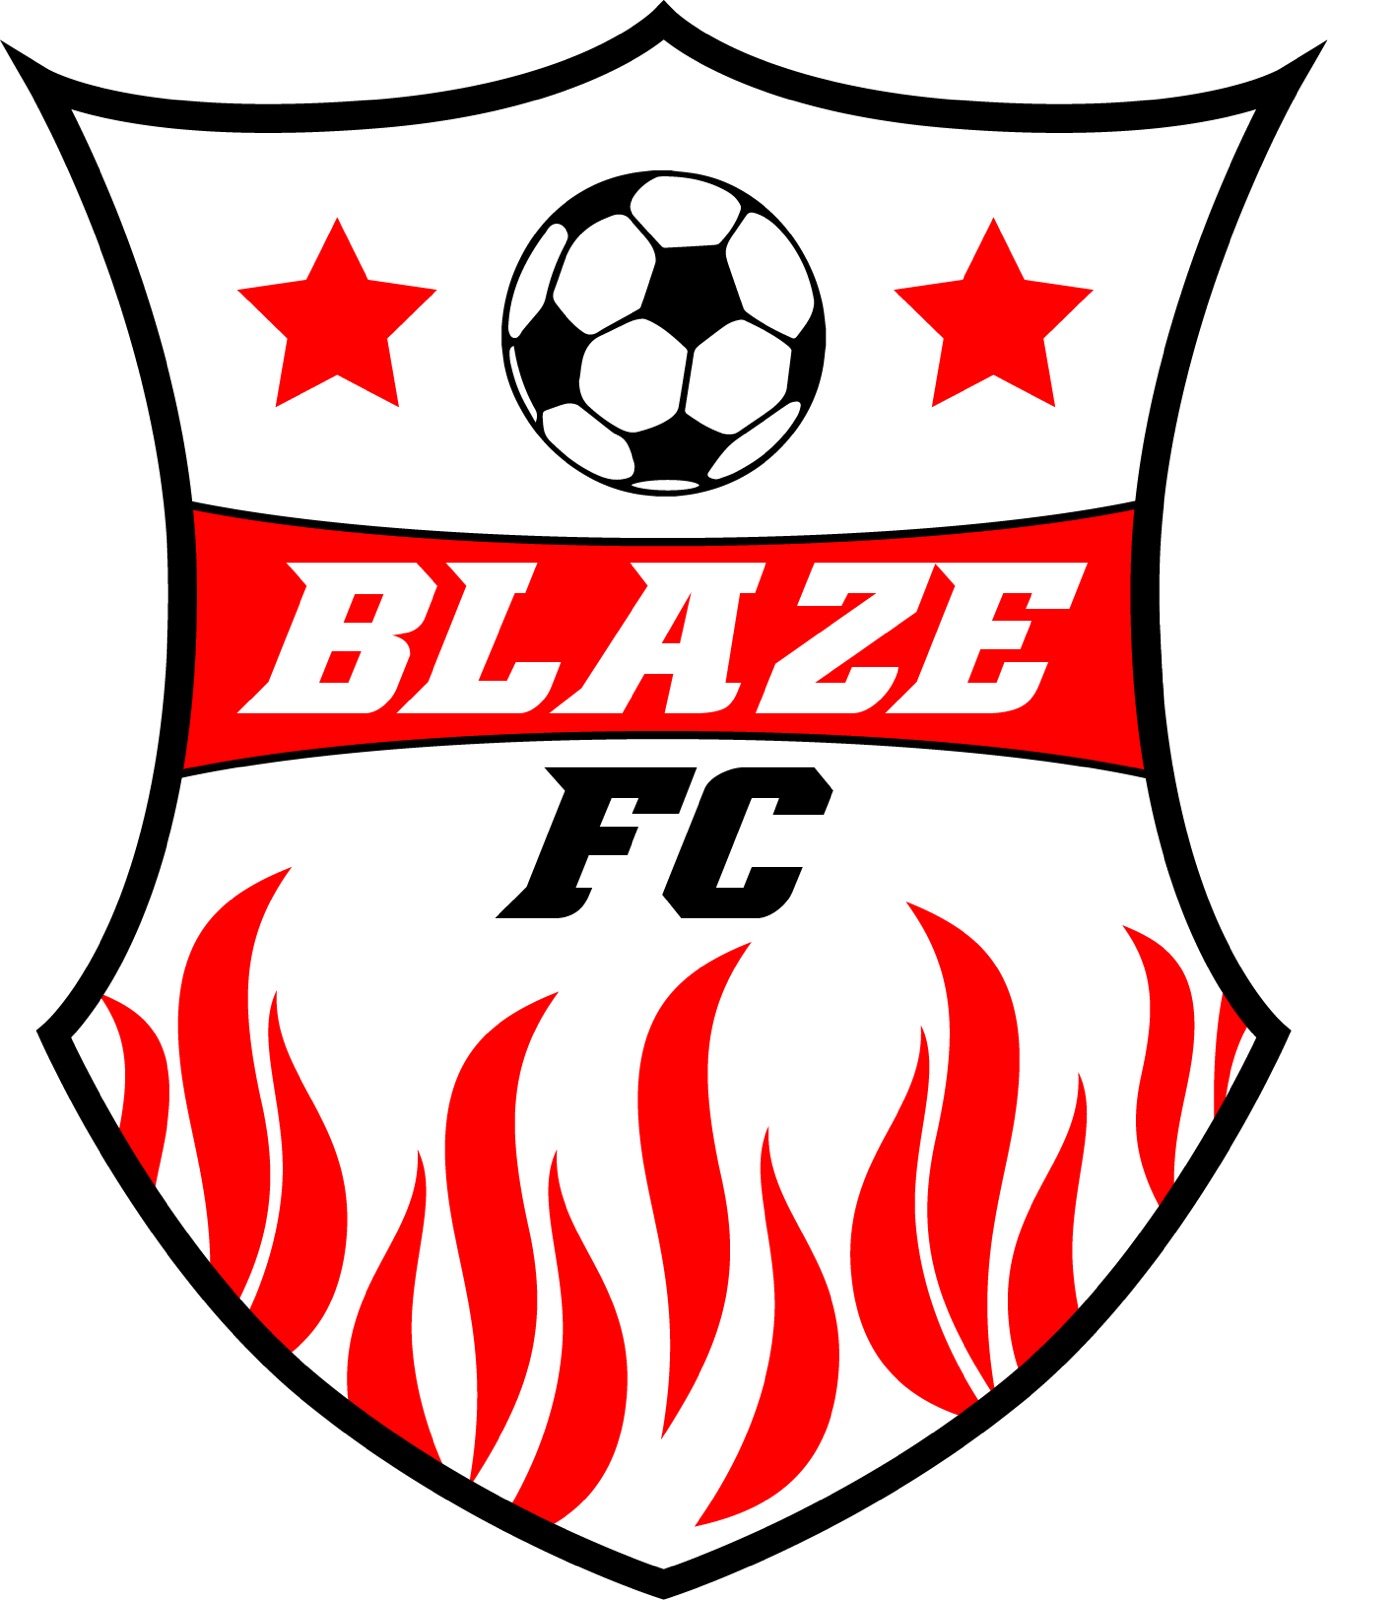 Blaze FC team badge